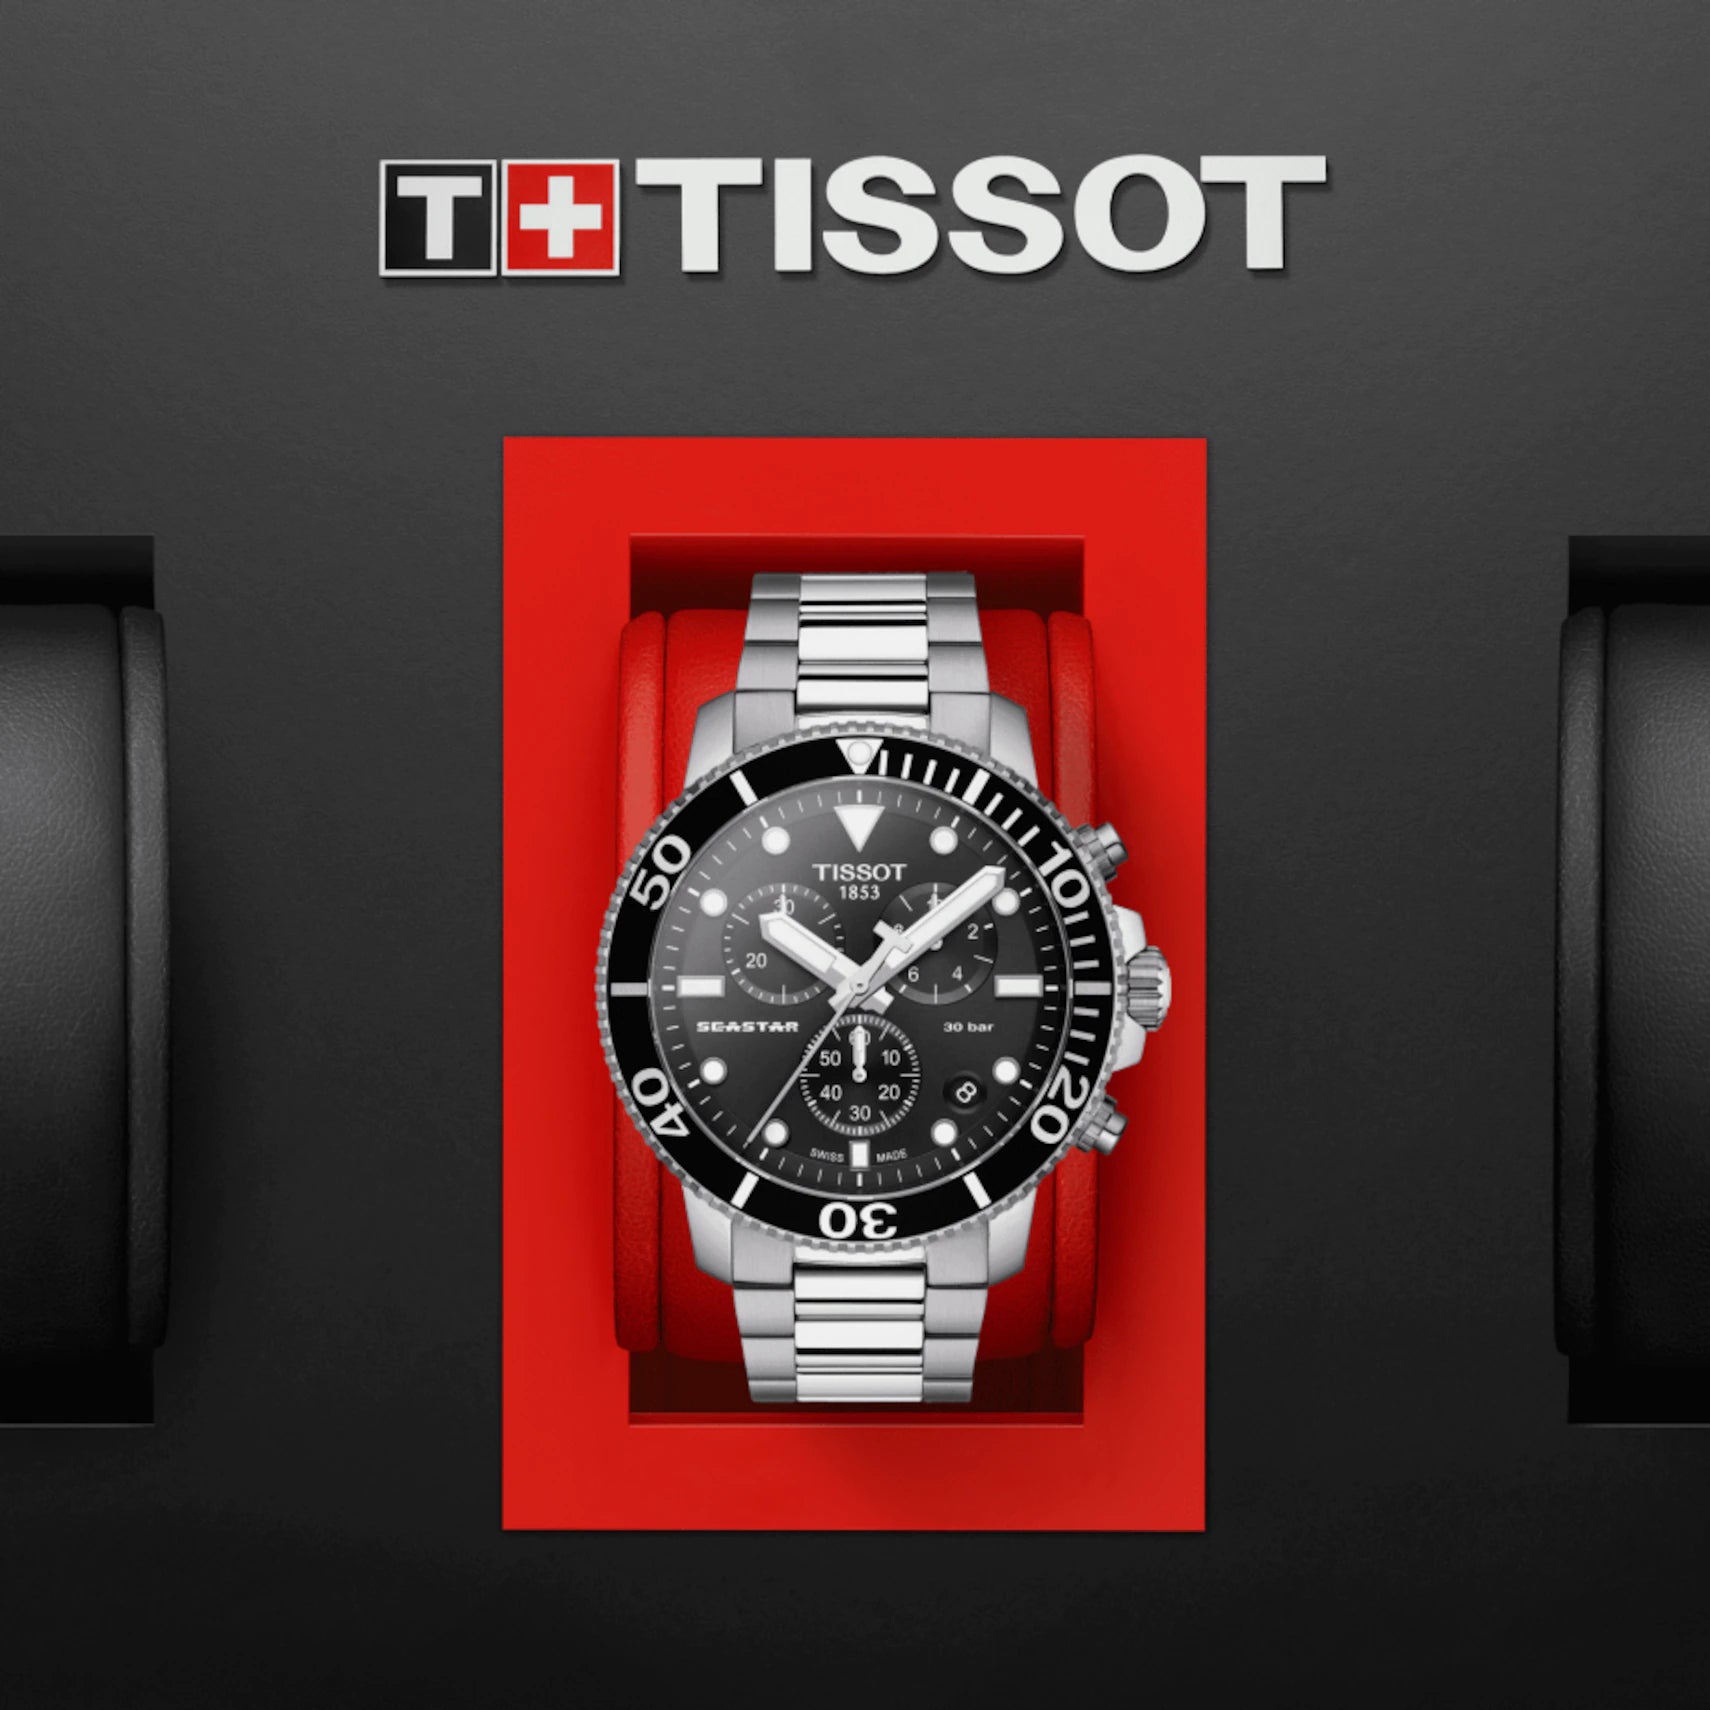 Tissot Seastar 1000 Chronograph, model #T120.417.11.051.00, at IJL Since 1937